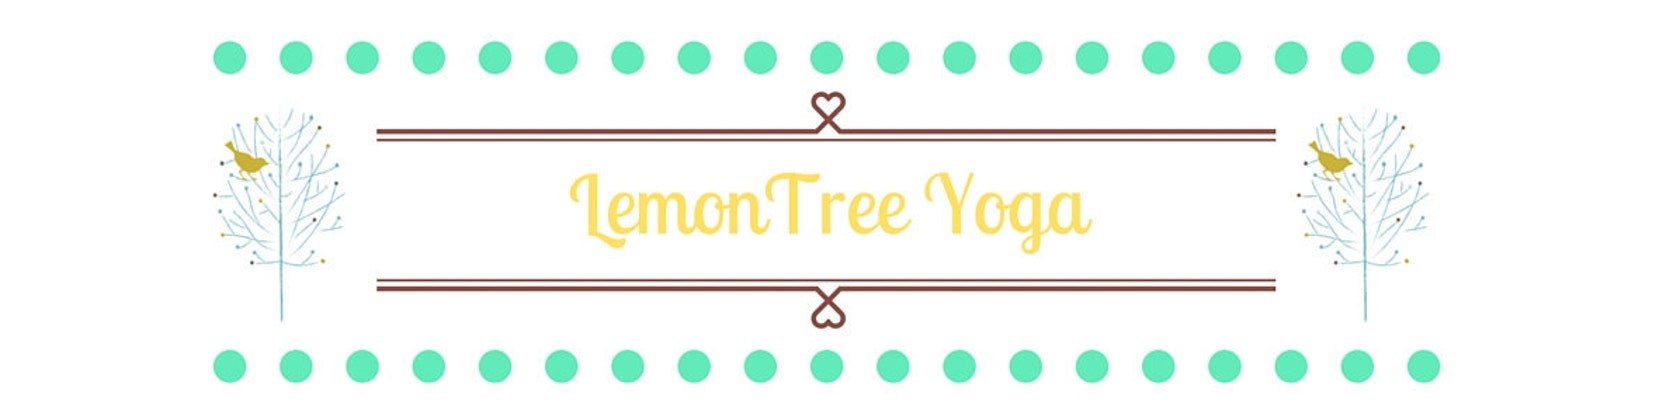 the lemon tree yoga